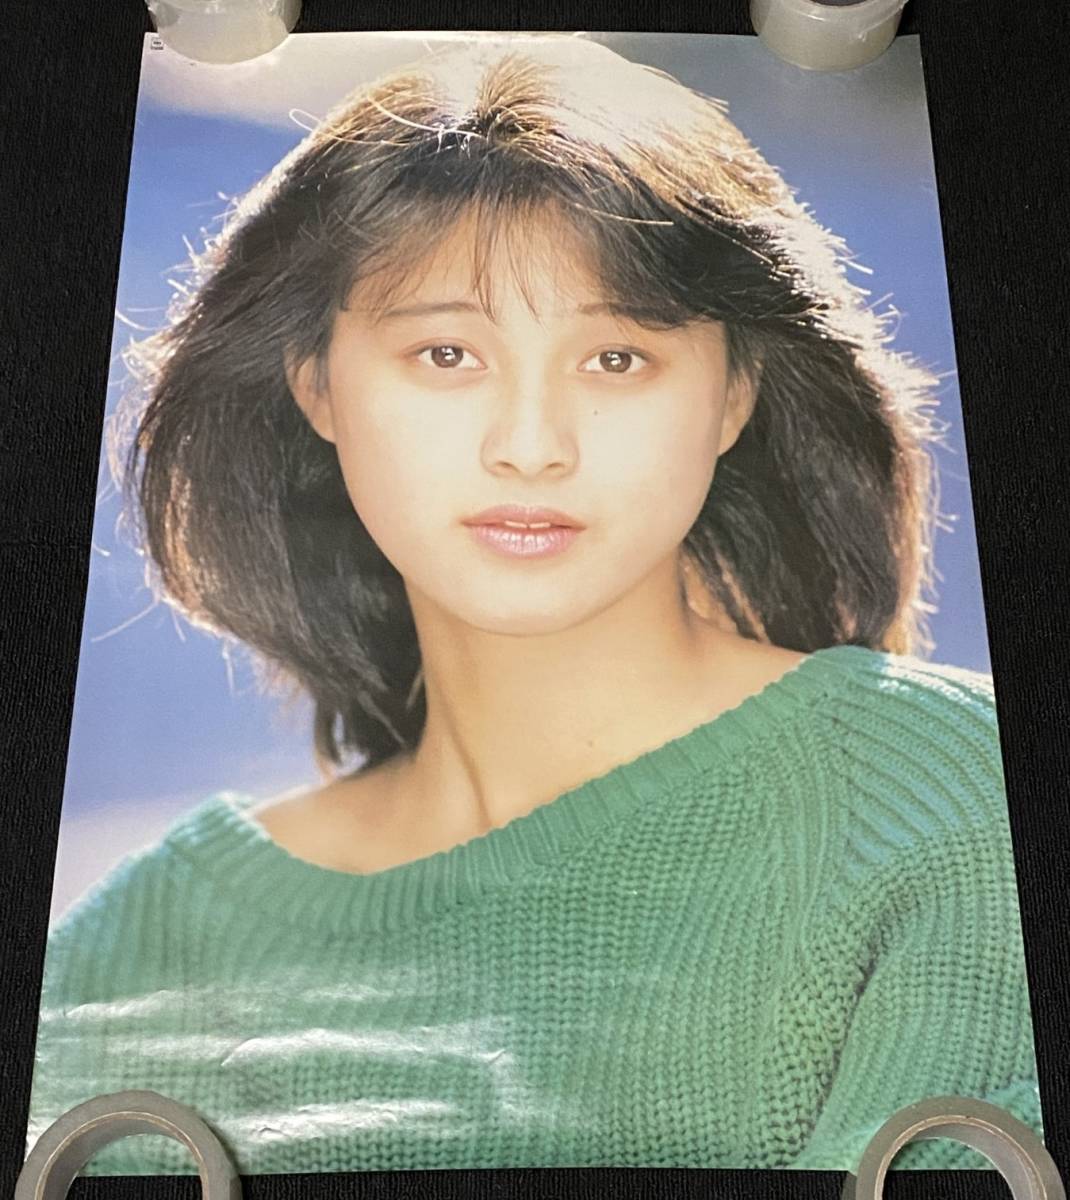 6935/ Watanabe Minayo постер / CBS SONY не продается / B2 размер 